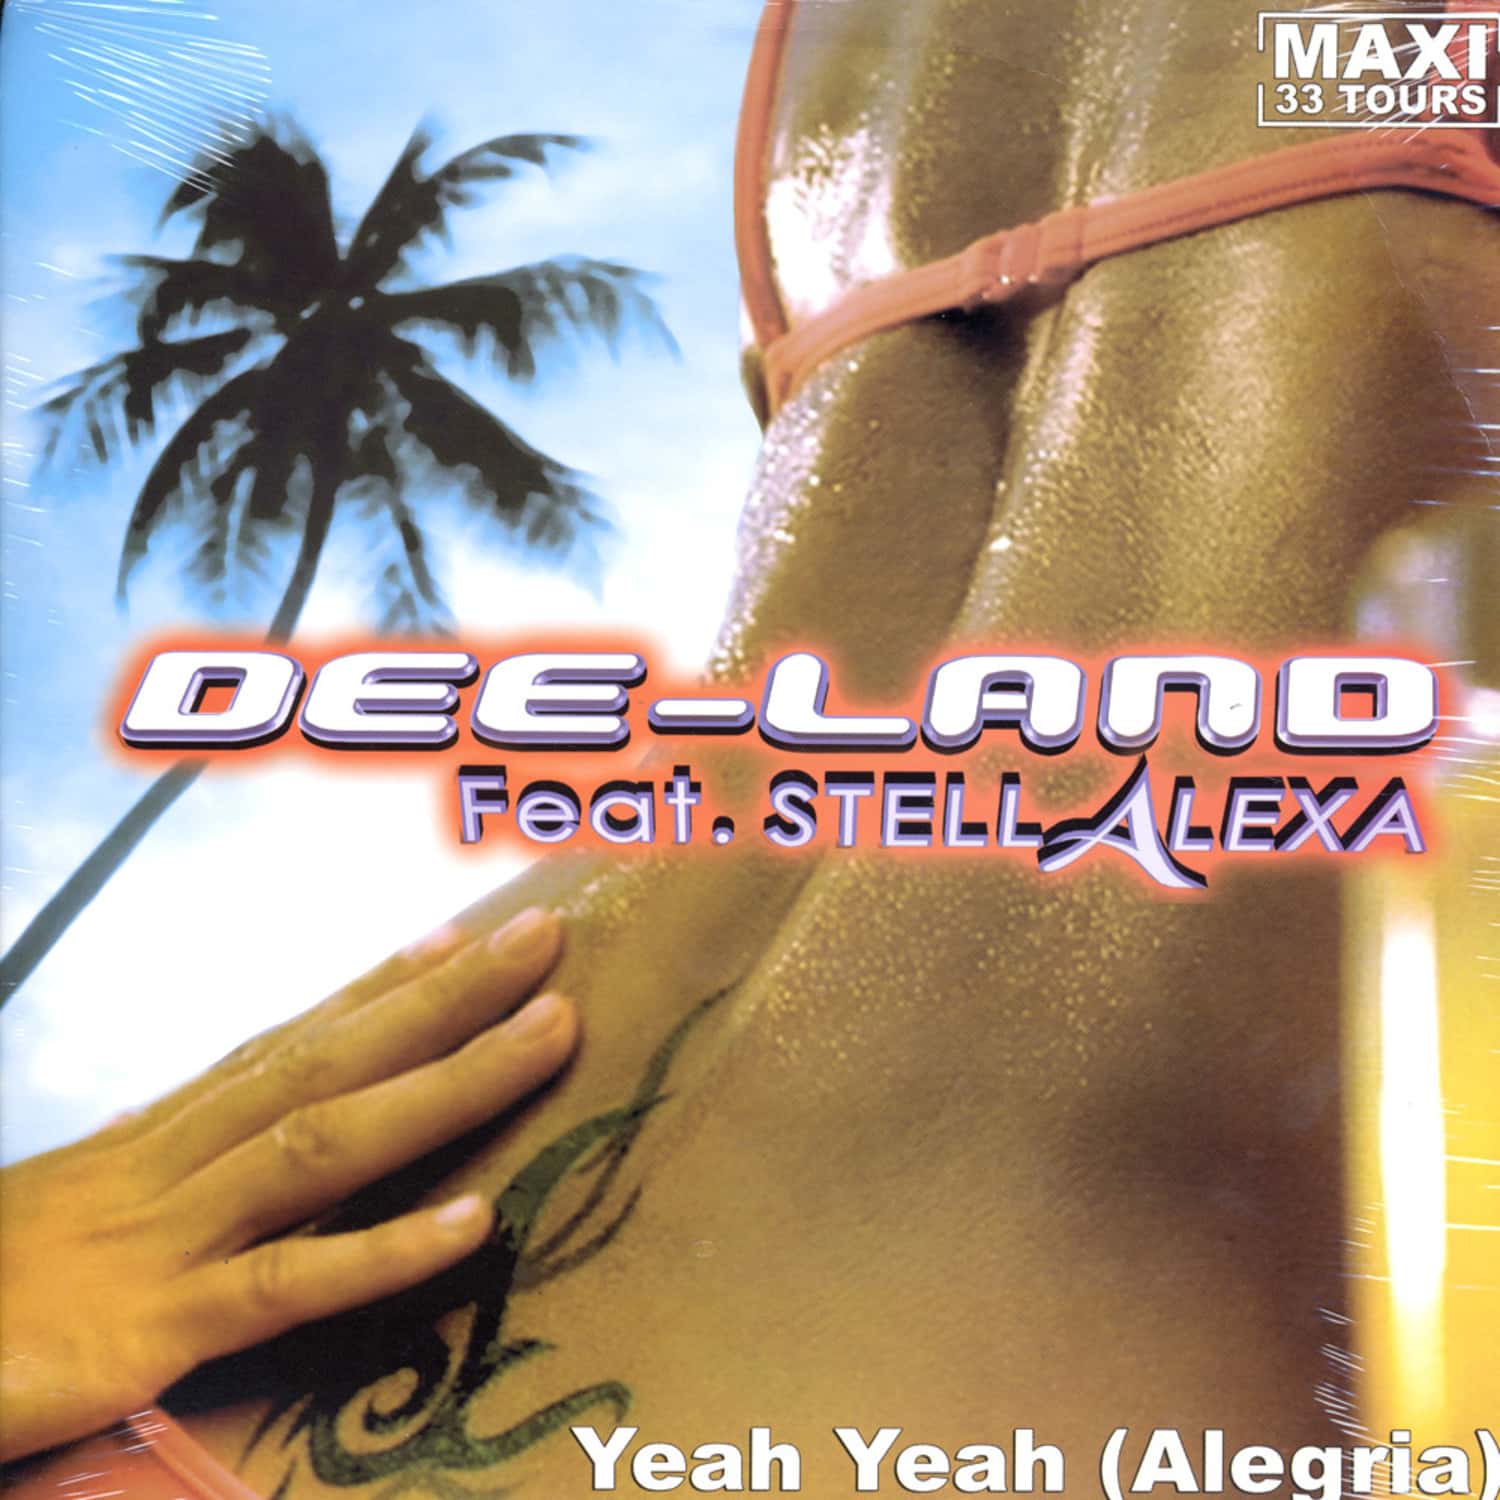 Dee-land feat. Stellalexa - YEAH YEAH 